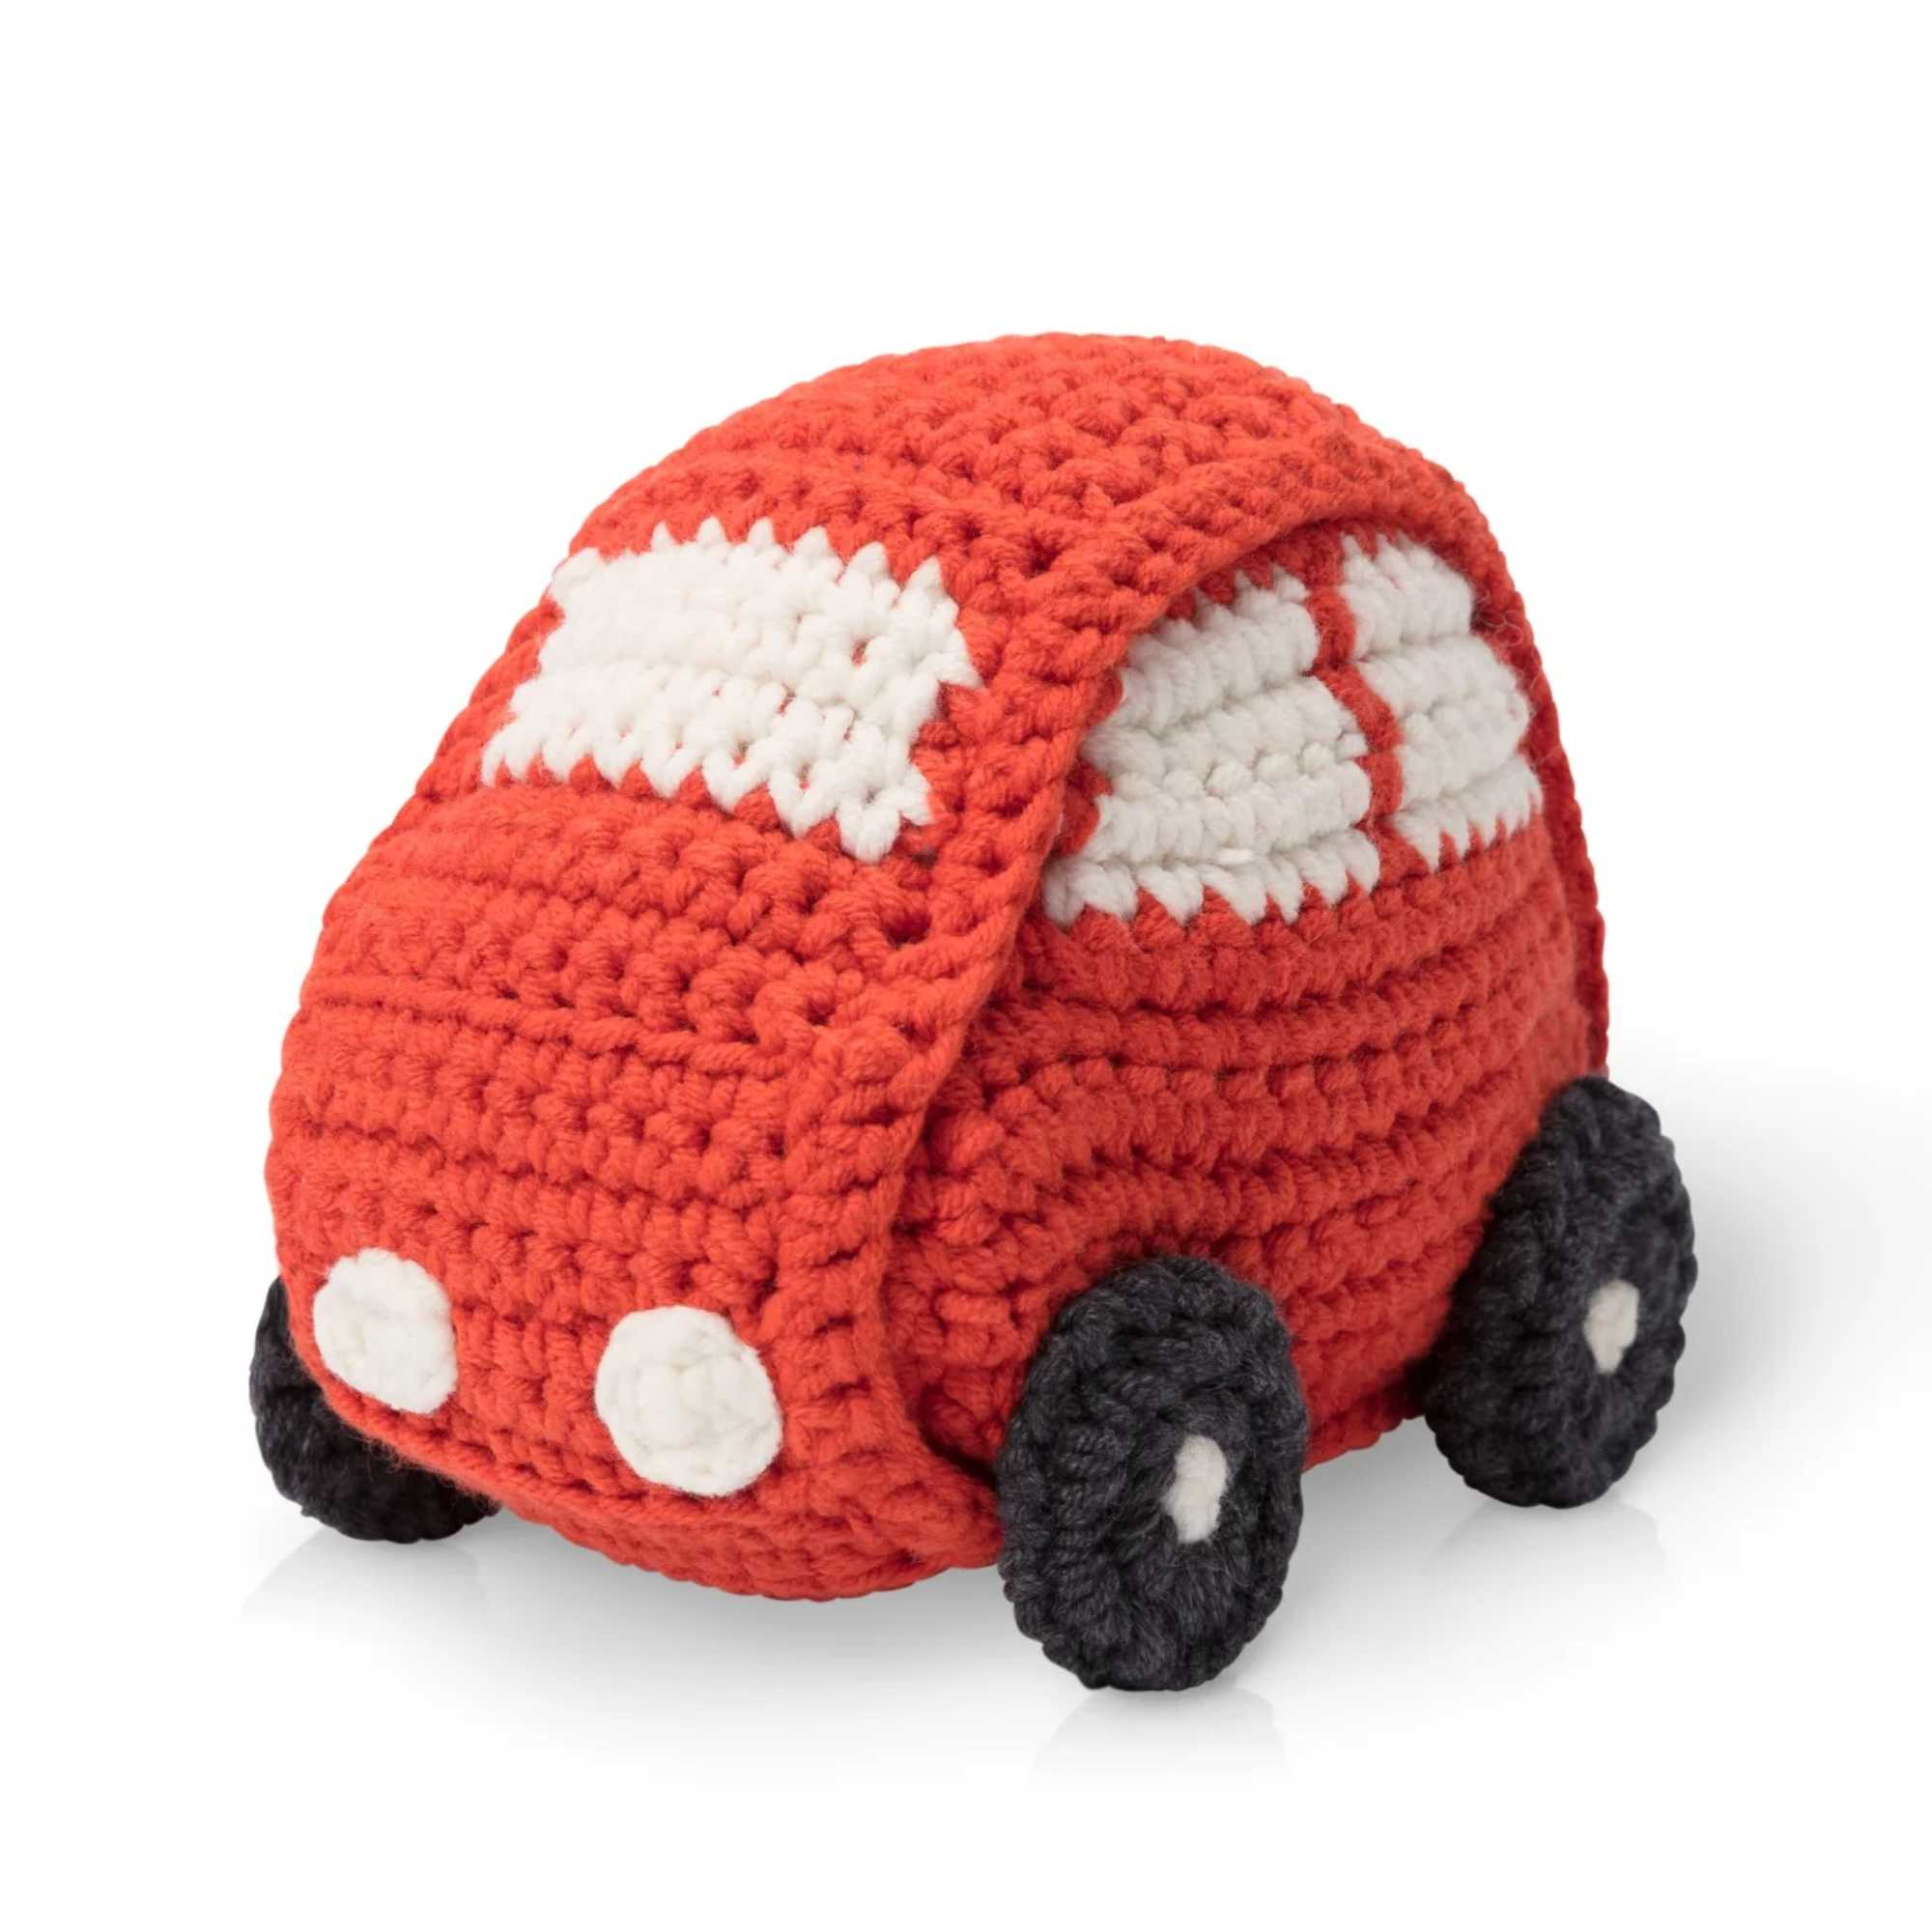 Just Dutch handmade Toy Car, red